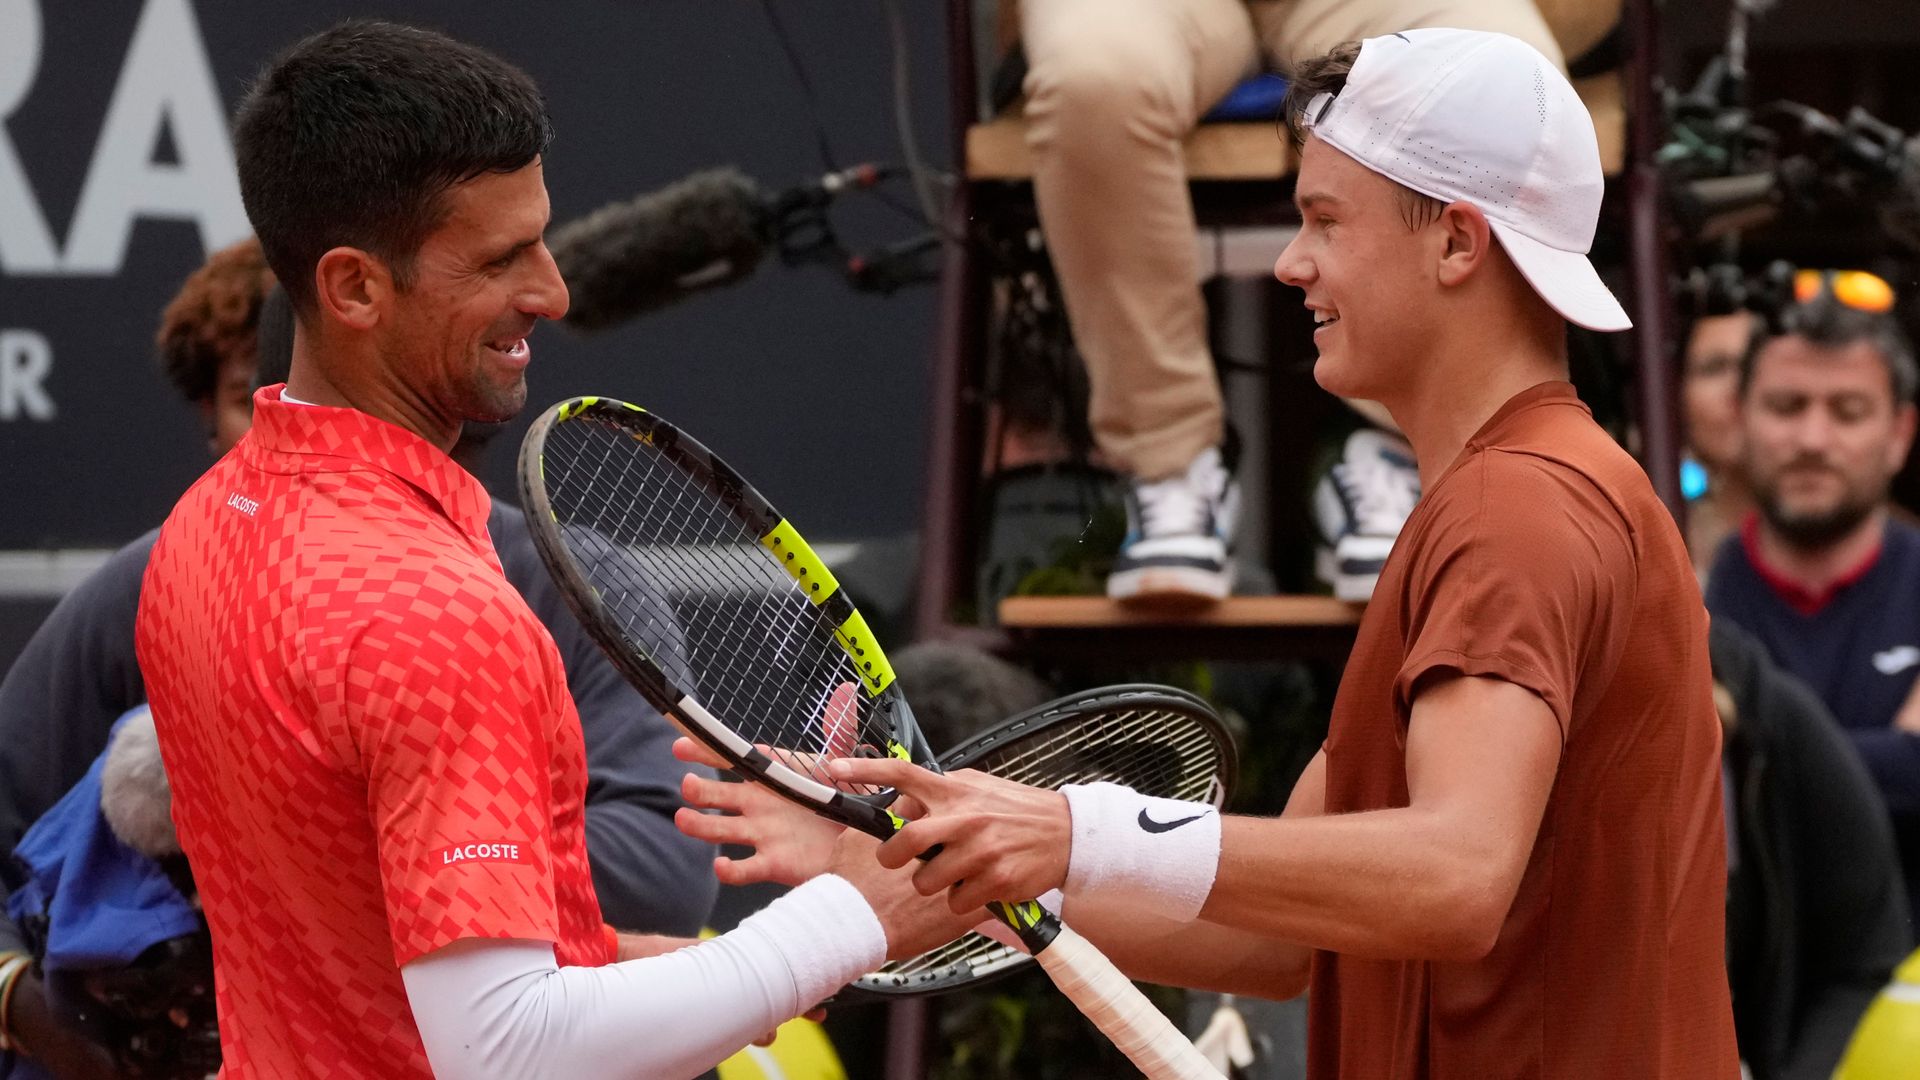 Danish delight as Rune shocks off-colour Djokovic in rainy Rome